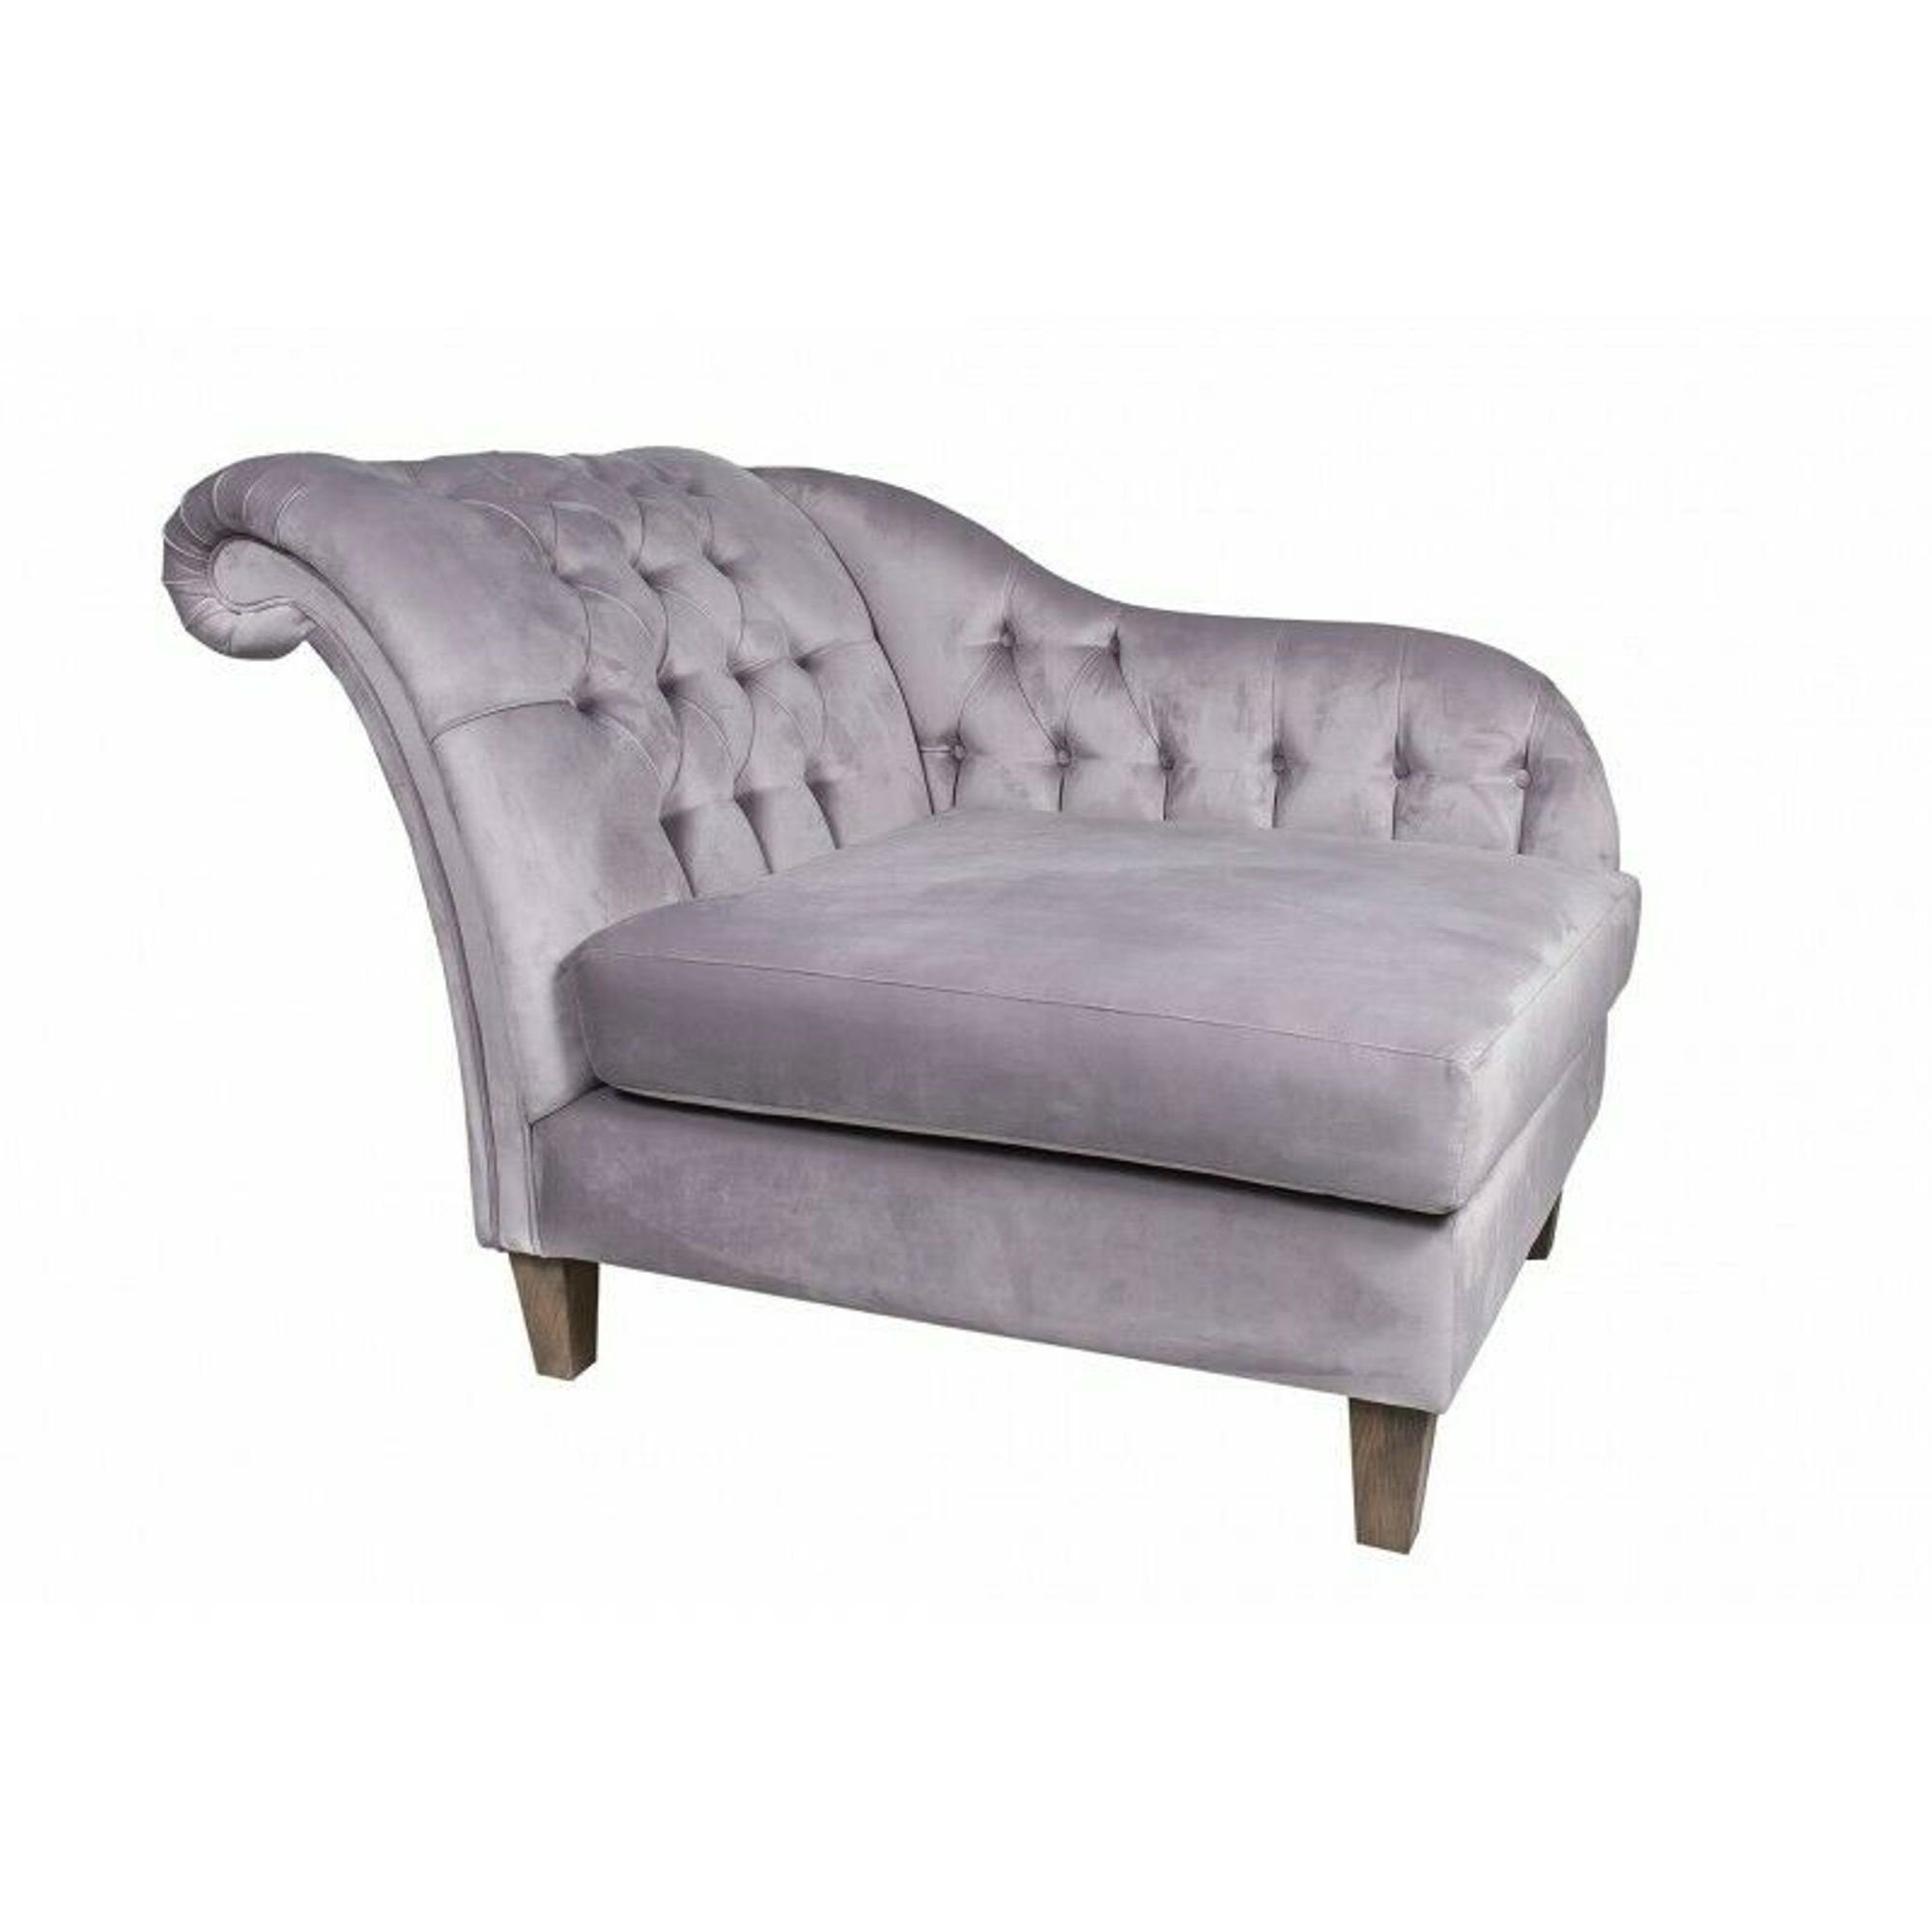 Shop von guter Qualität JVmoebel Chaiselongue Grauer Chesterfield Chaiselongue Liege Europe Neu, Relaxliege in Made Sofa